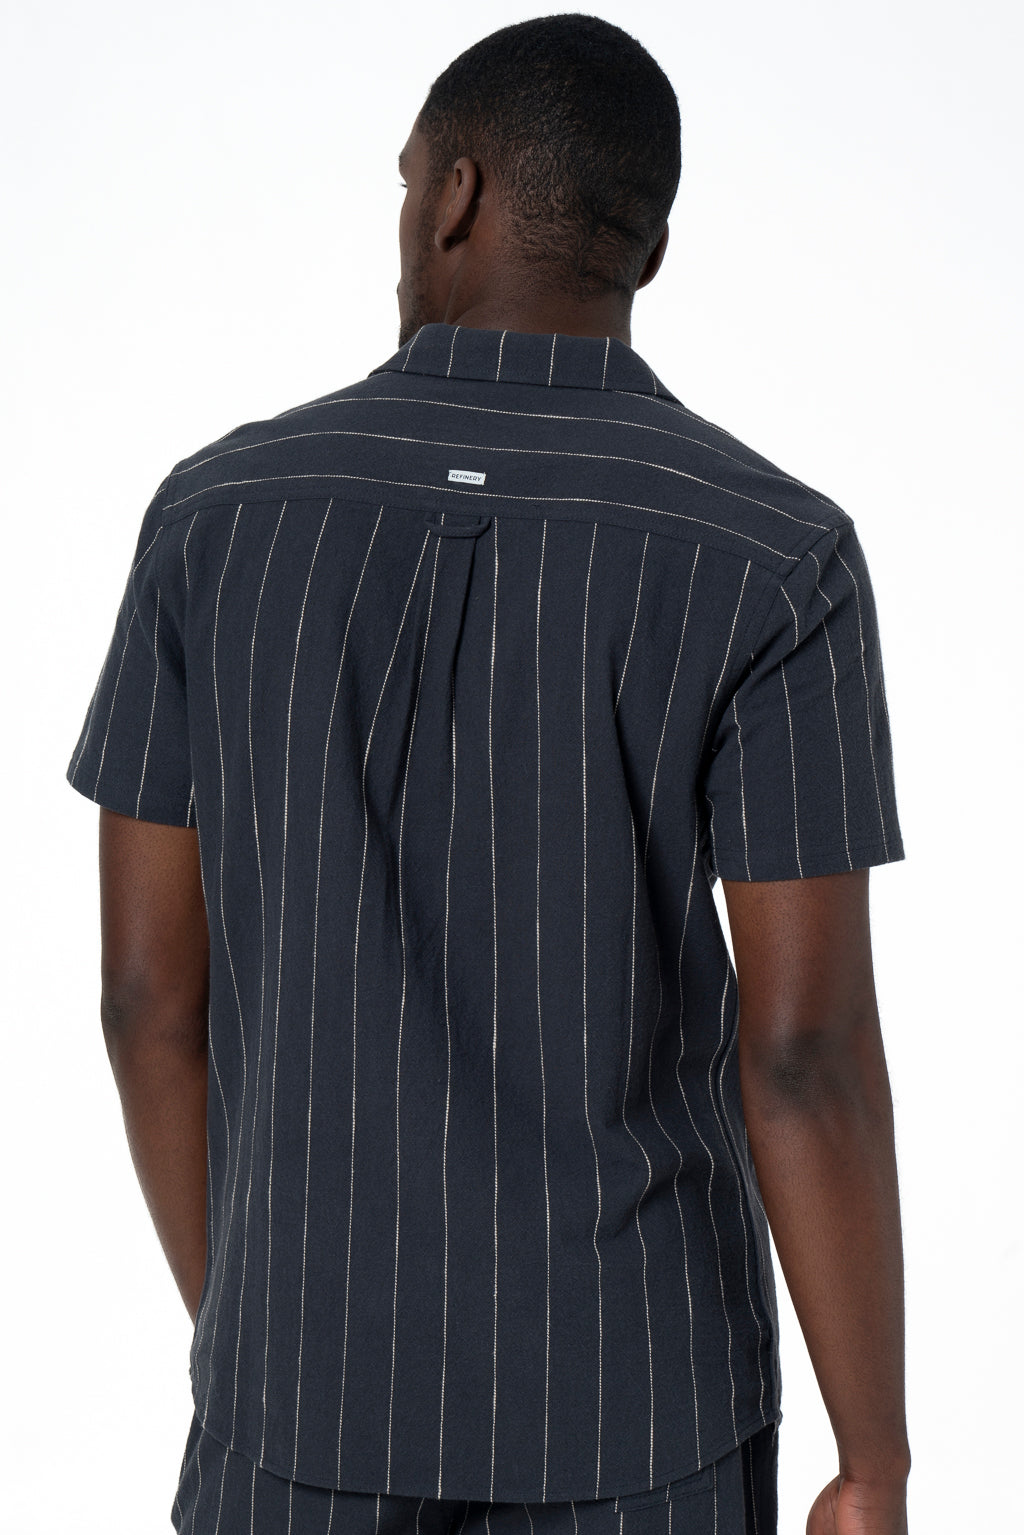 Textured Striped Shirt _ 141636 _ Black